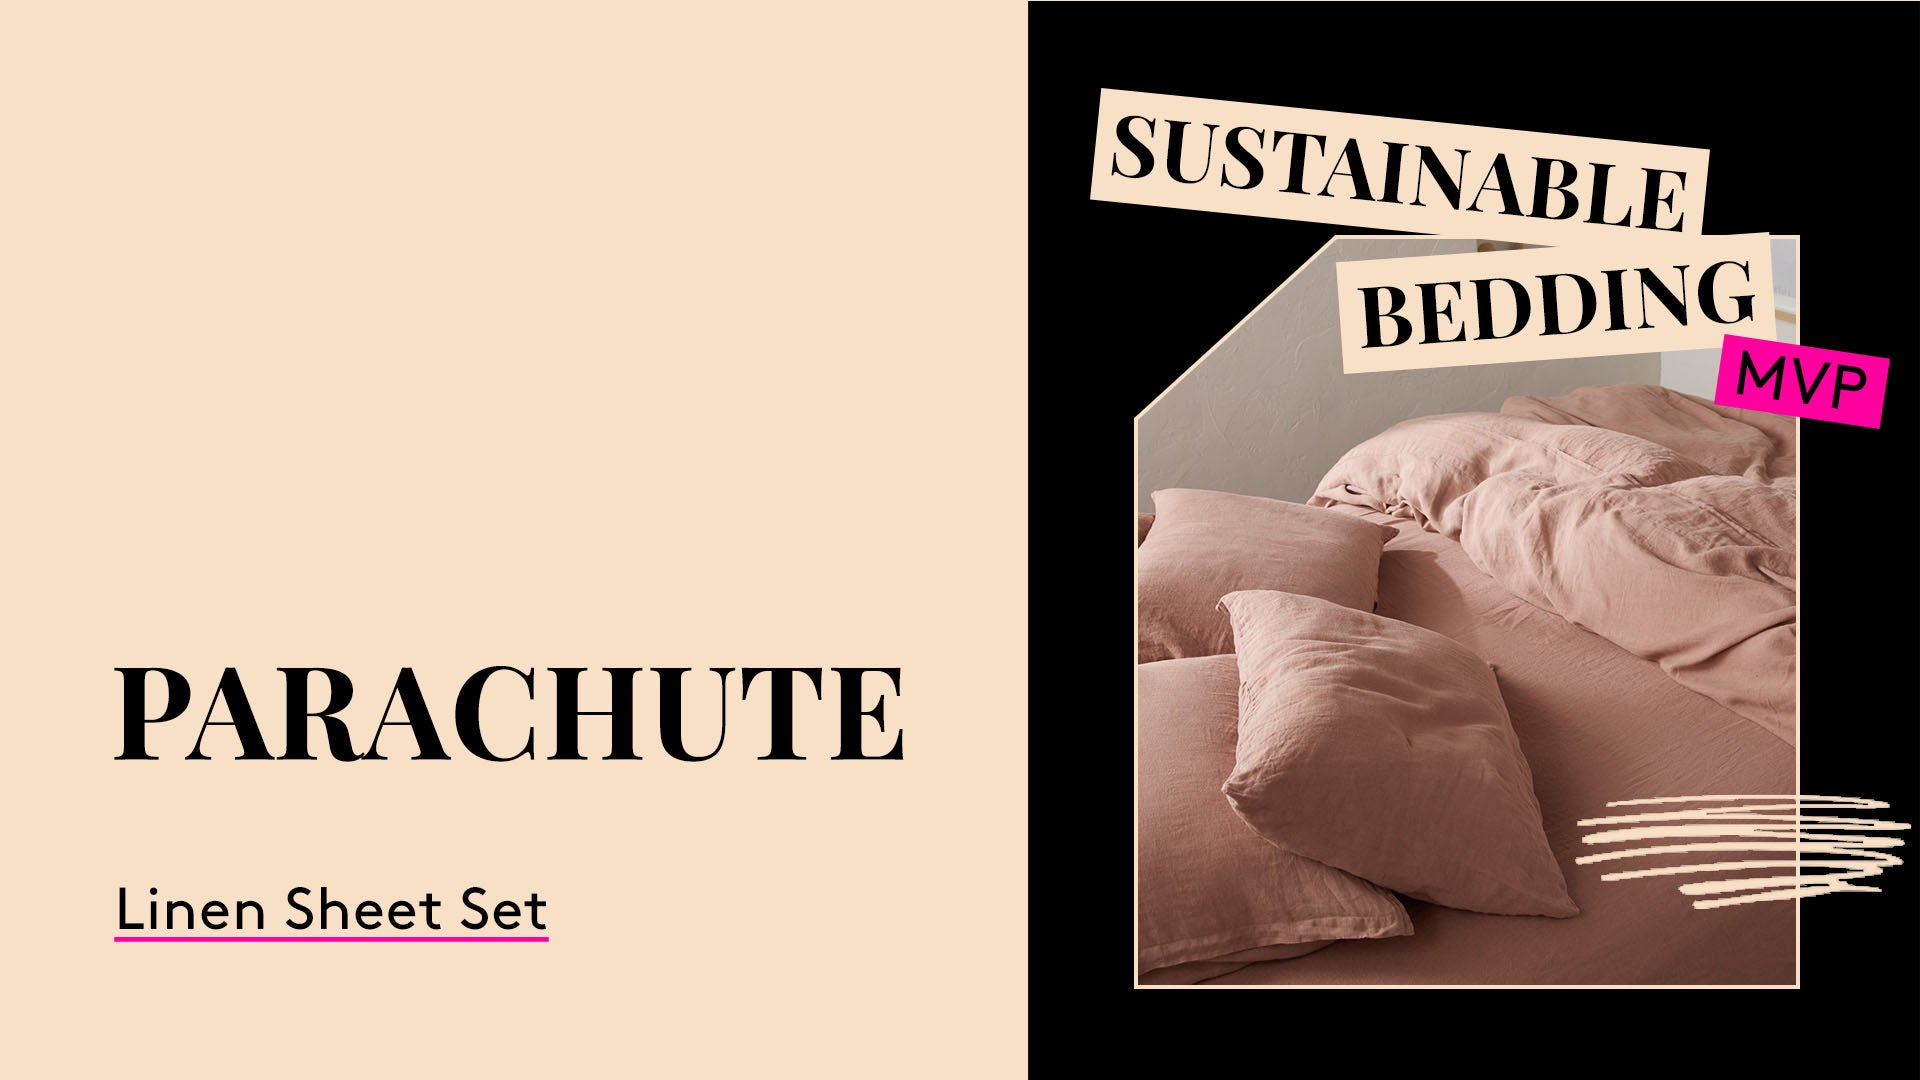 Sustainable Bedding MVP. Parachute Linen Sheet Set.